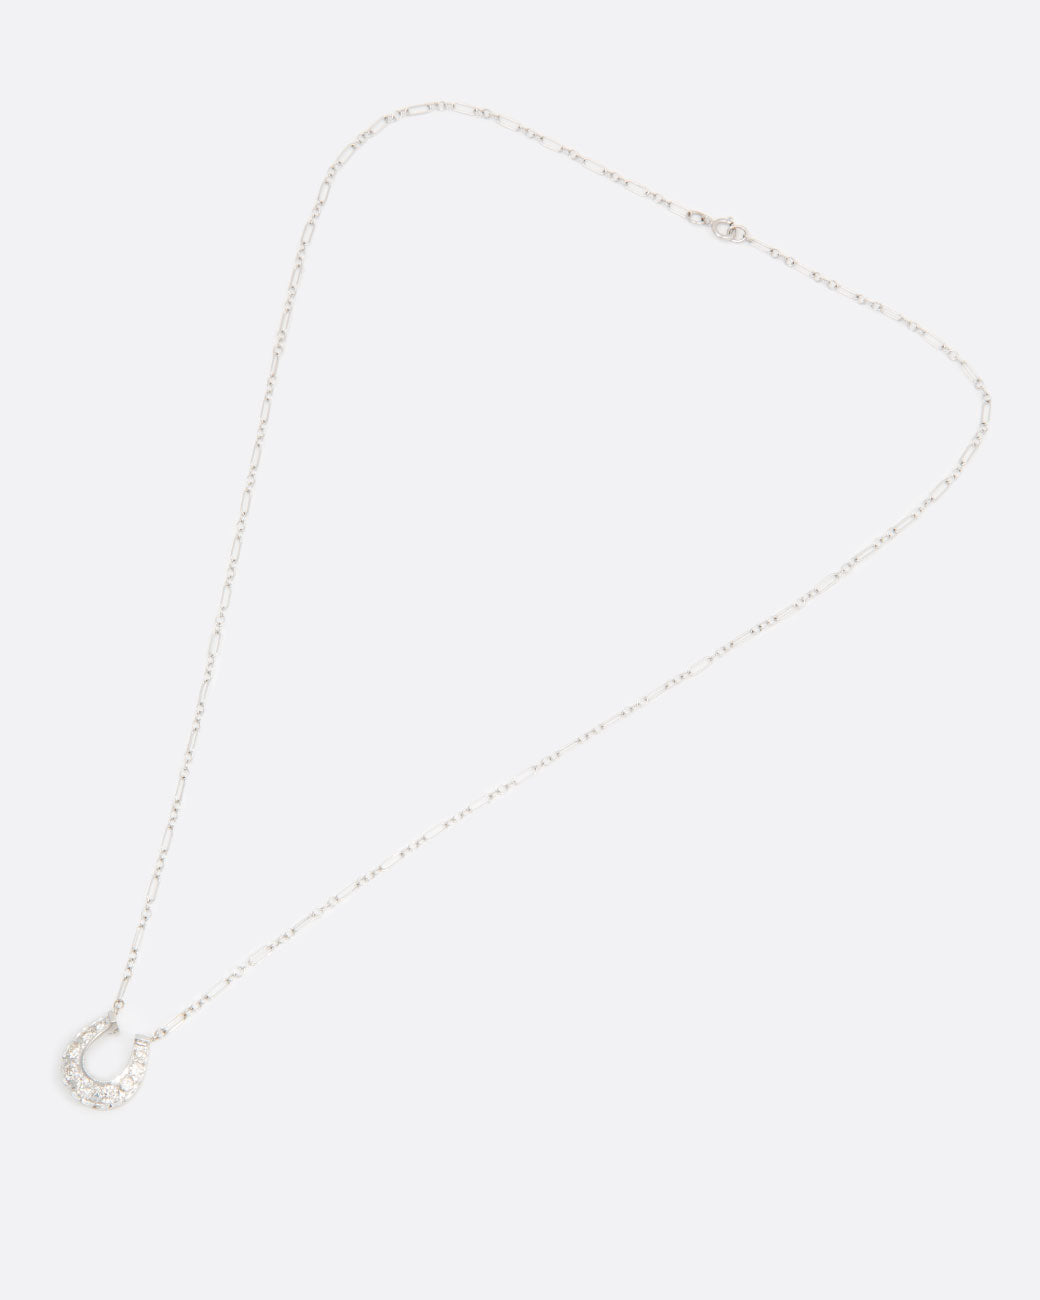 Diamond horseshoe necklace, shown laying flat.